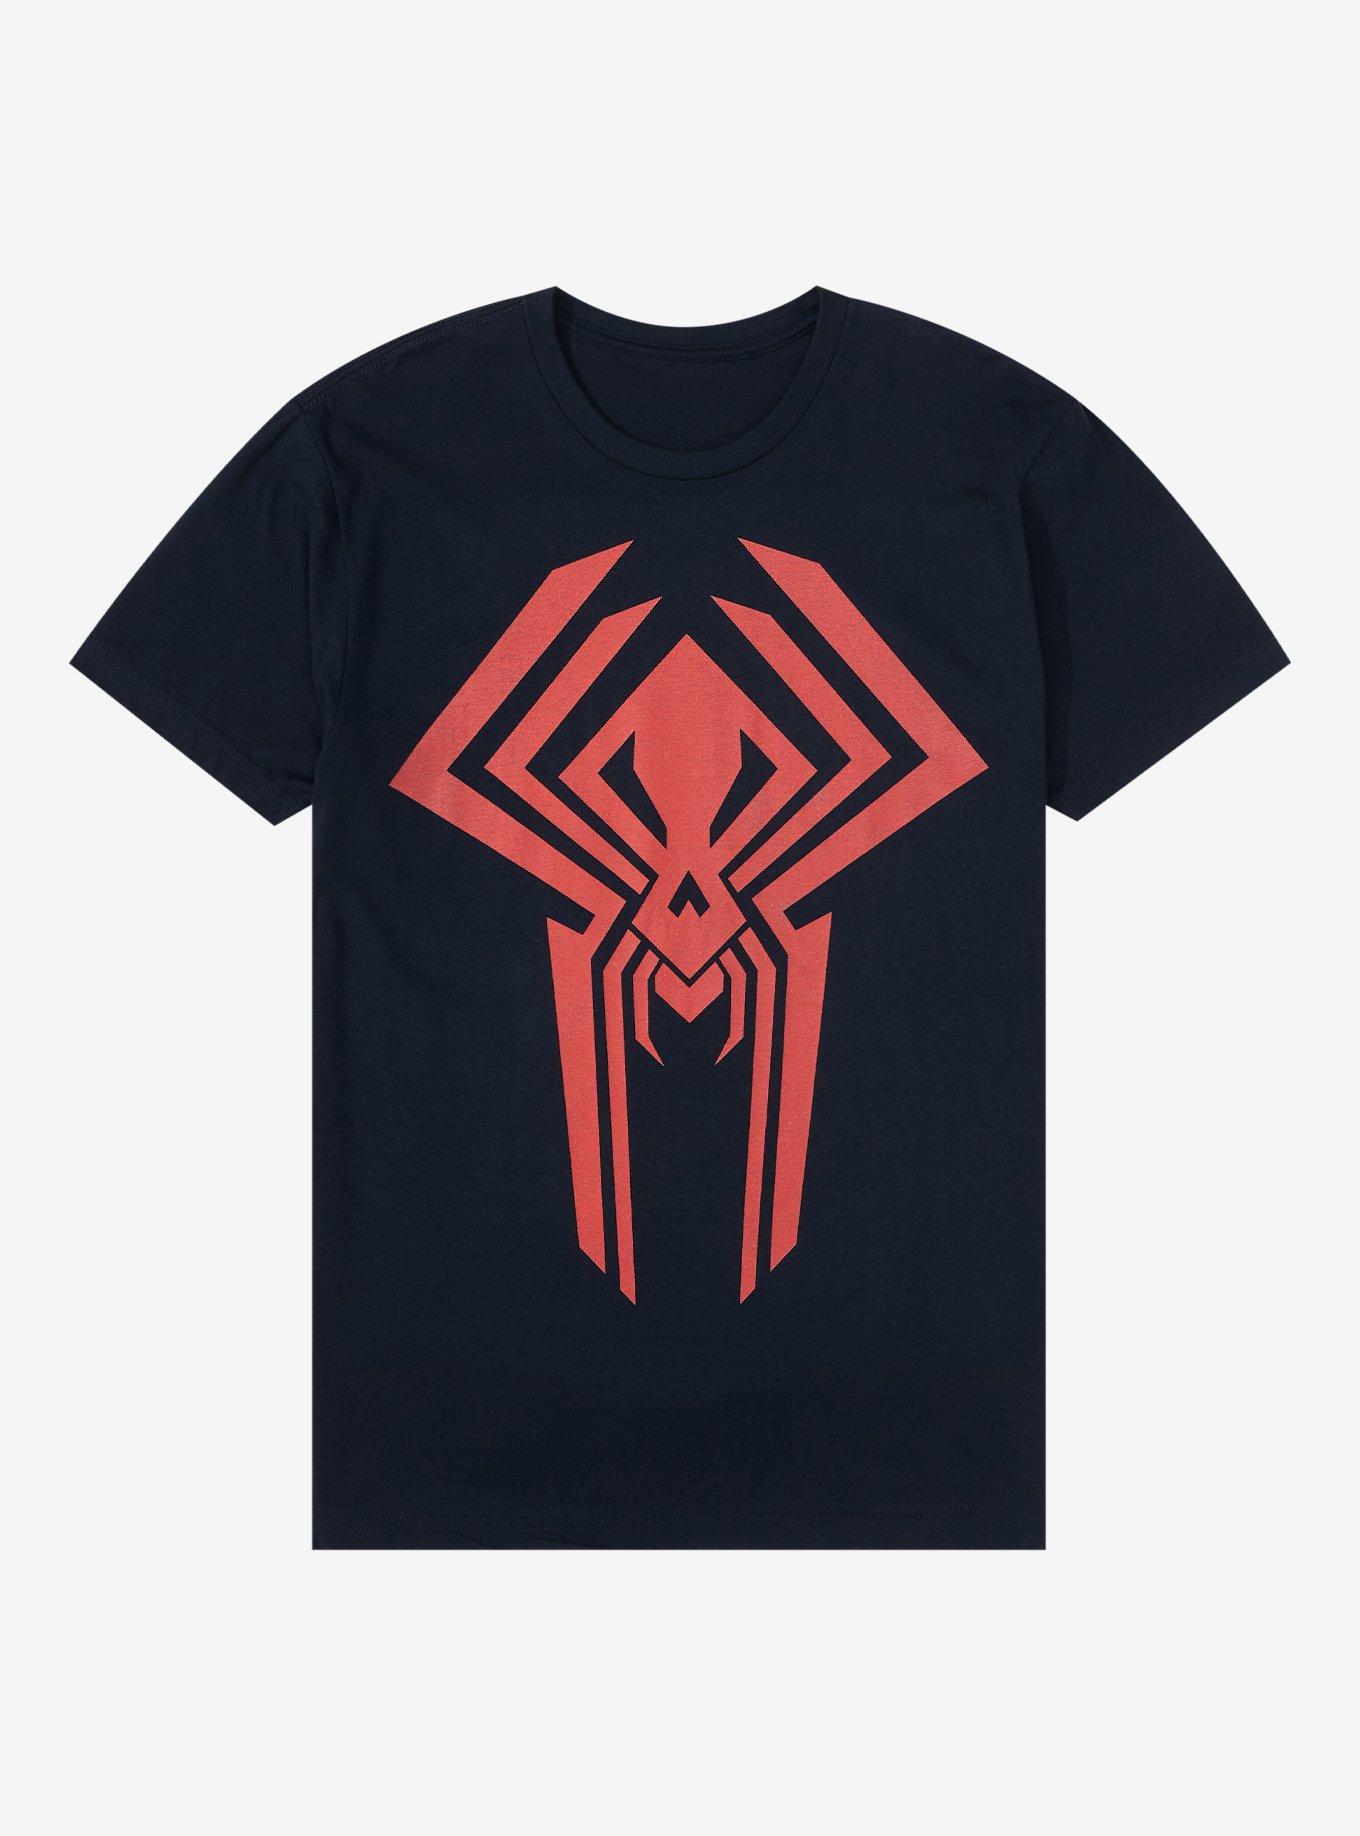 Marvel Spider-Man: Across Spider-Man Logo T-Shirt 2099 Topic | The Hot Spider-Verse